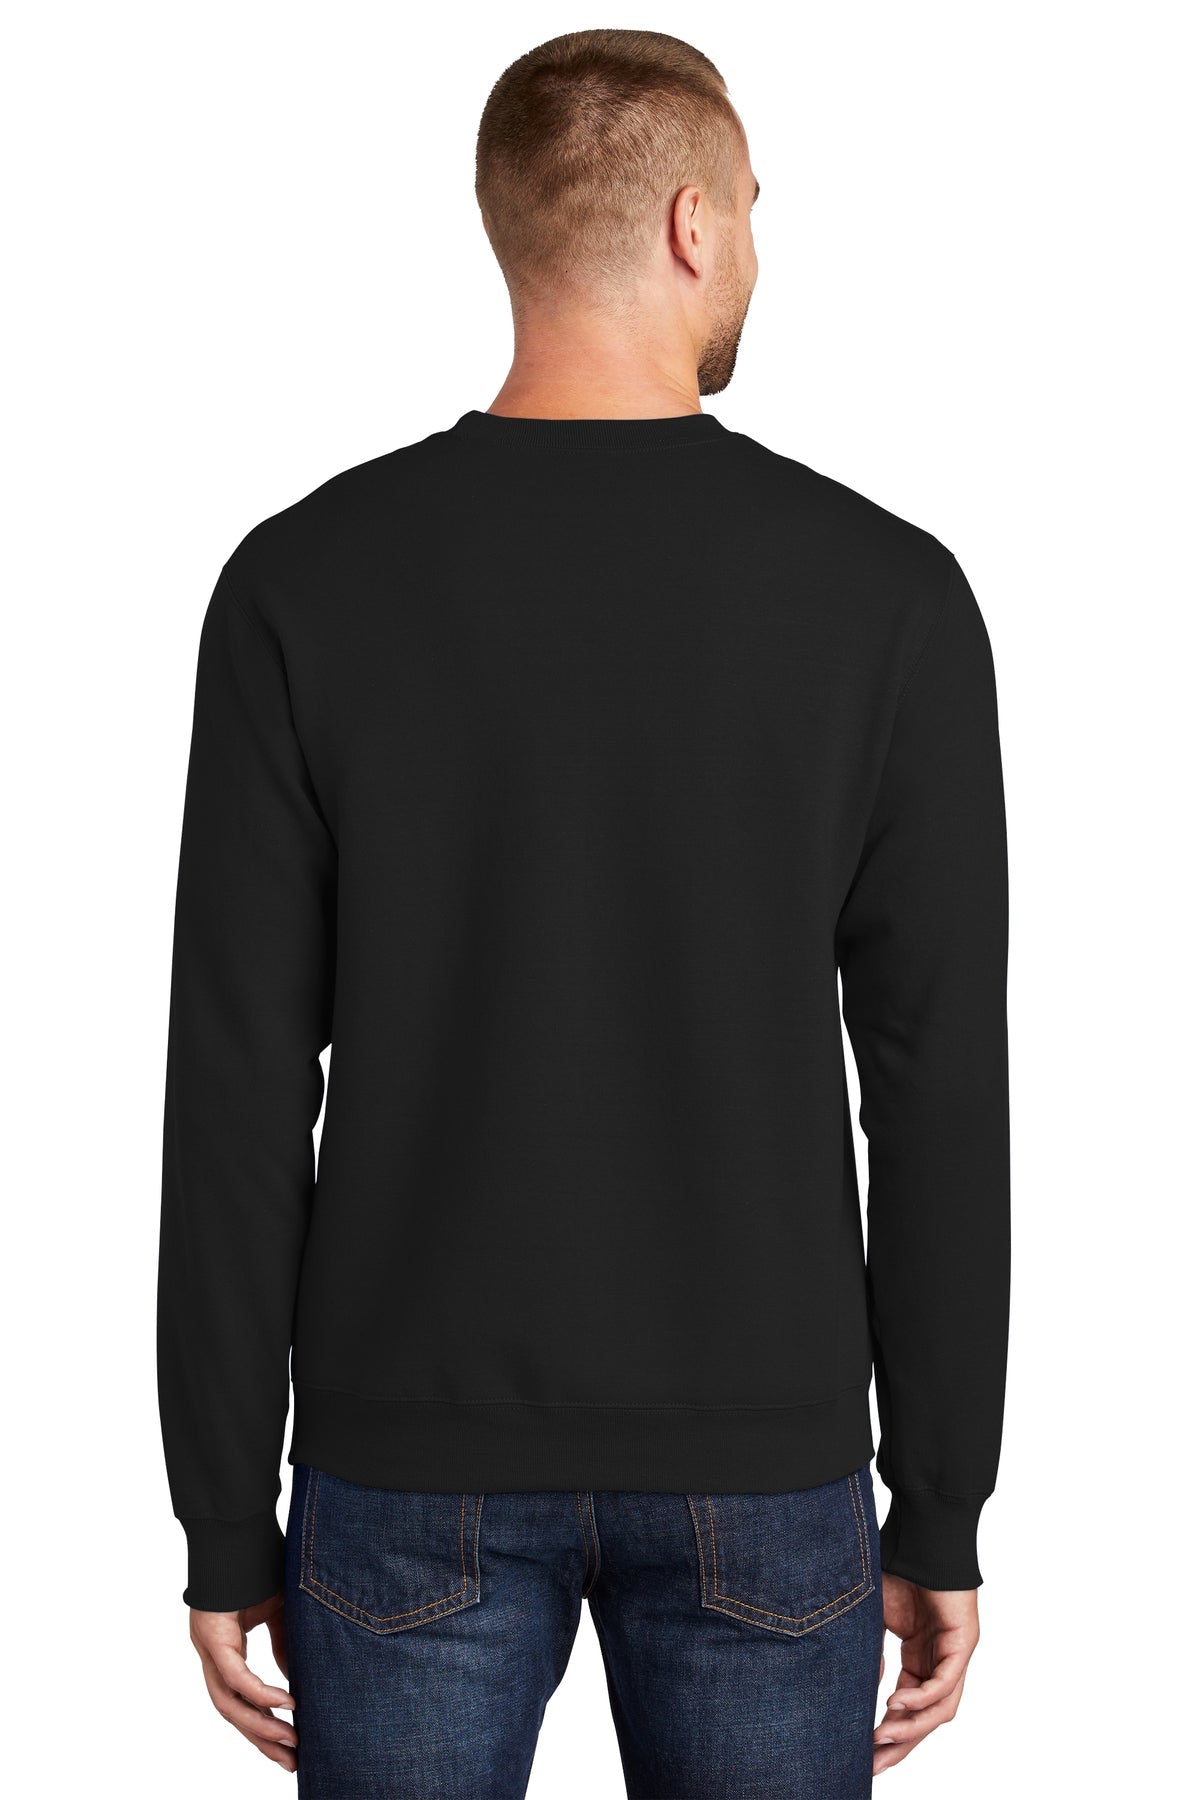 port & company_pc90 _jet black_company_logo_sweatshirts